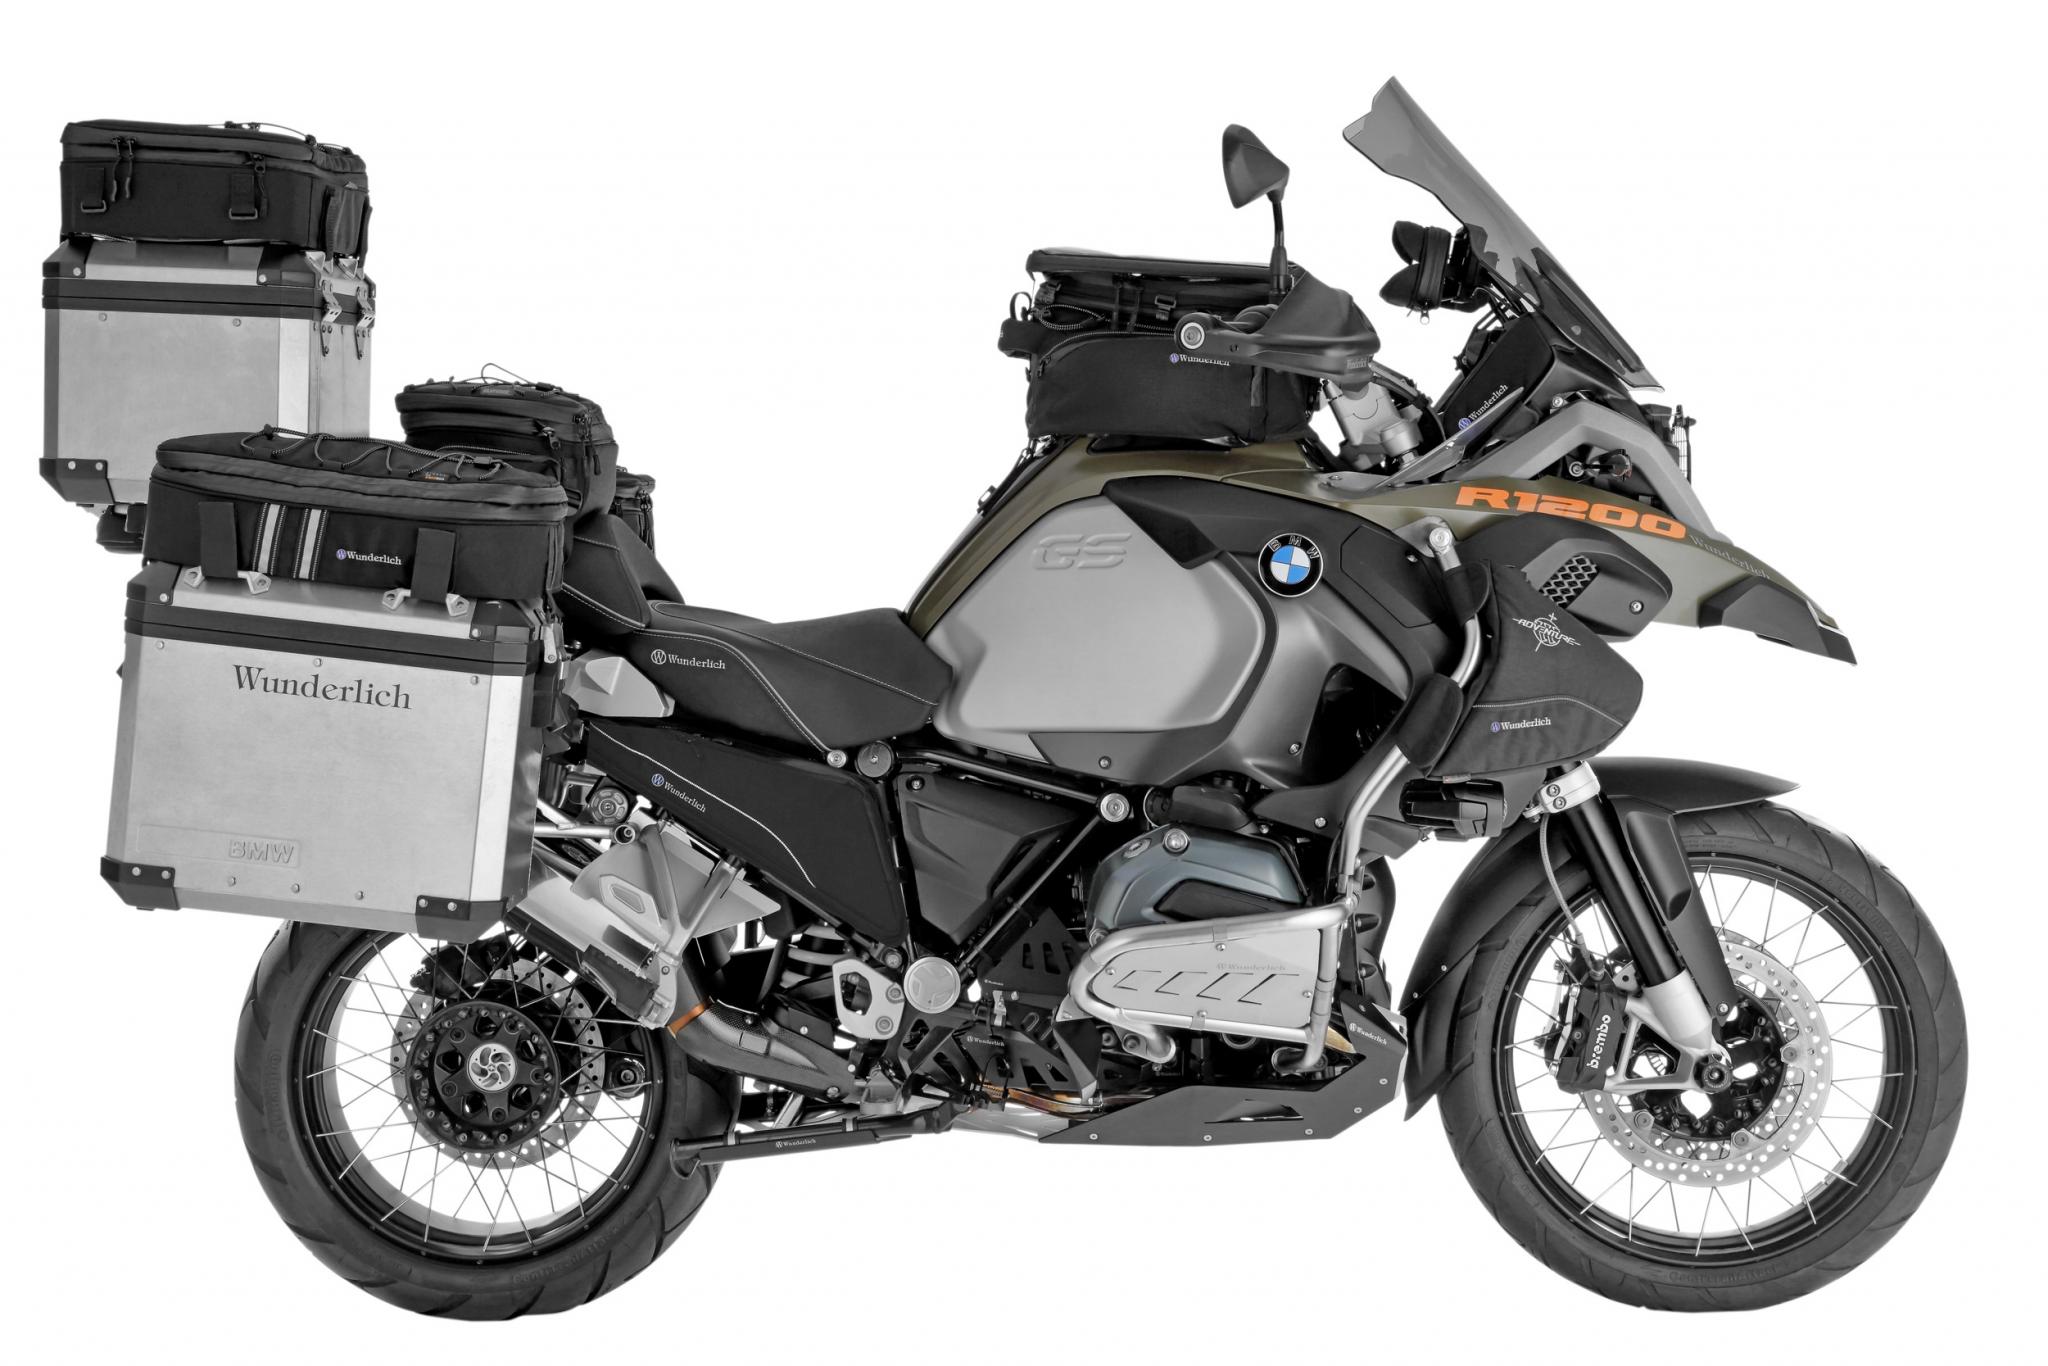 Обзор мотоцикла бмв r1200gs — технические характеристики